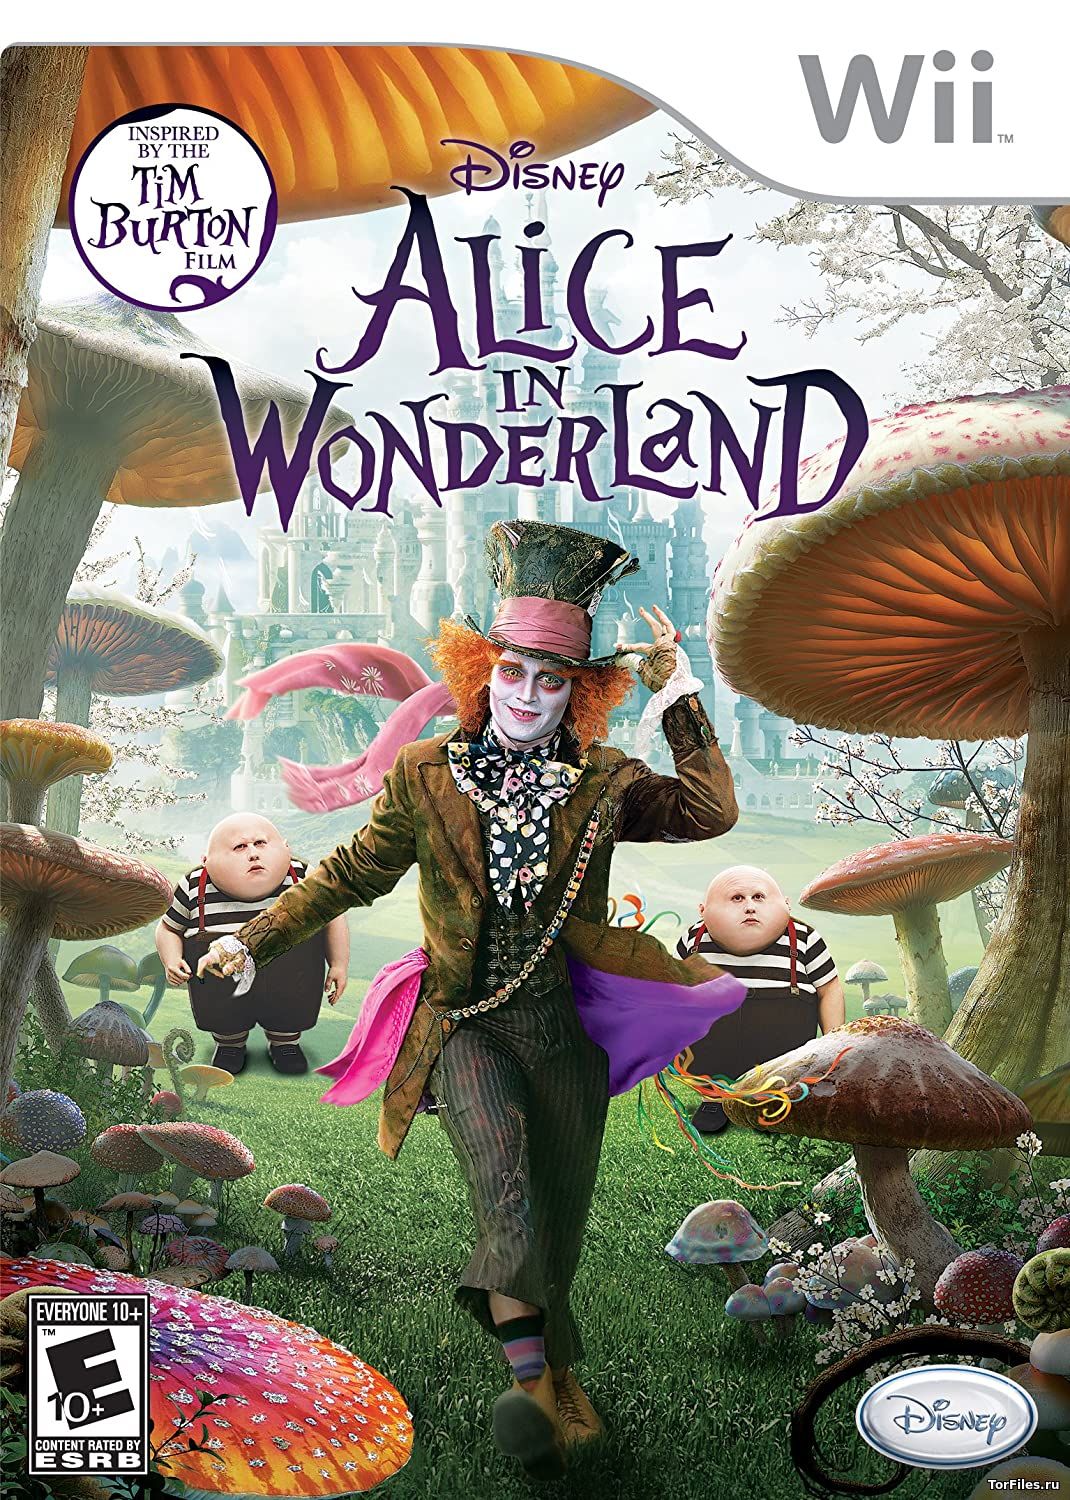 [WII] Alice in Wonderland [PAL/ENG]